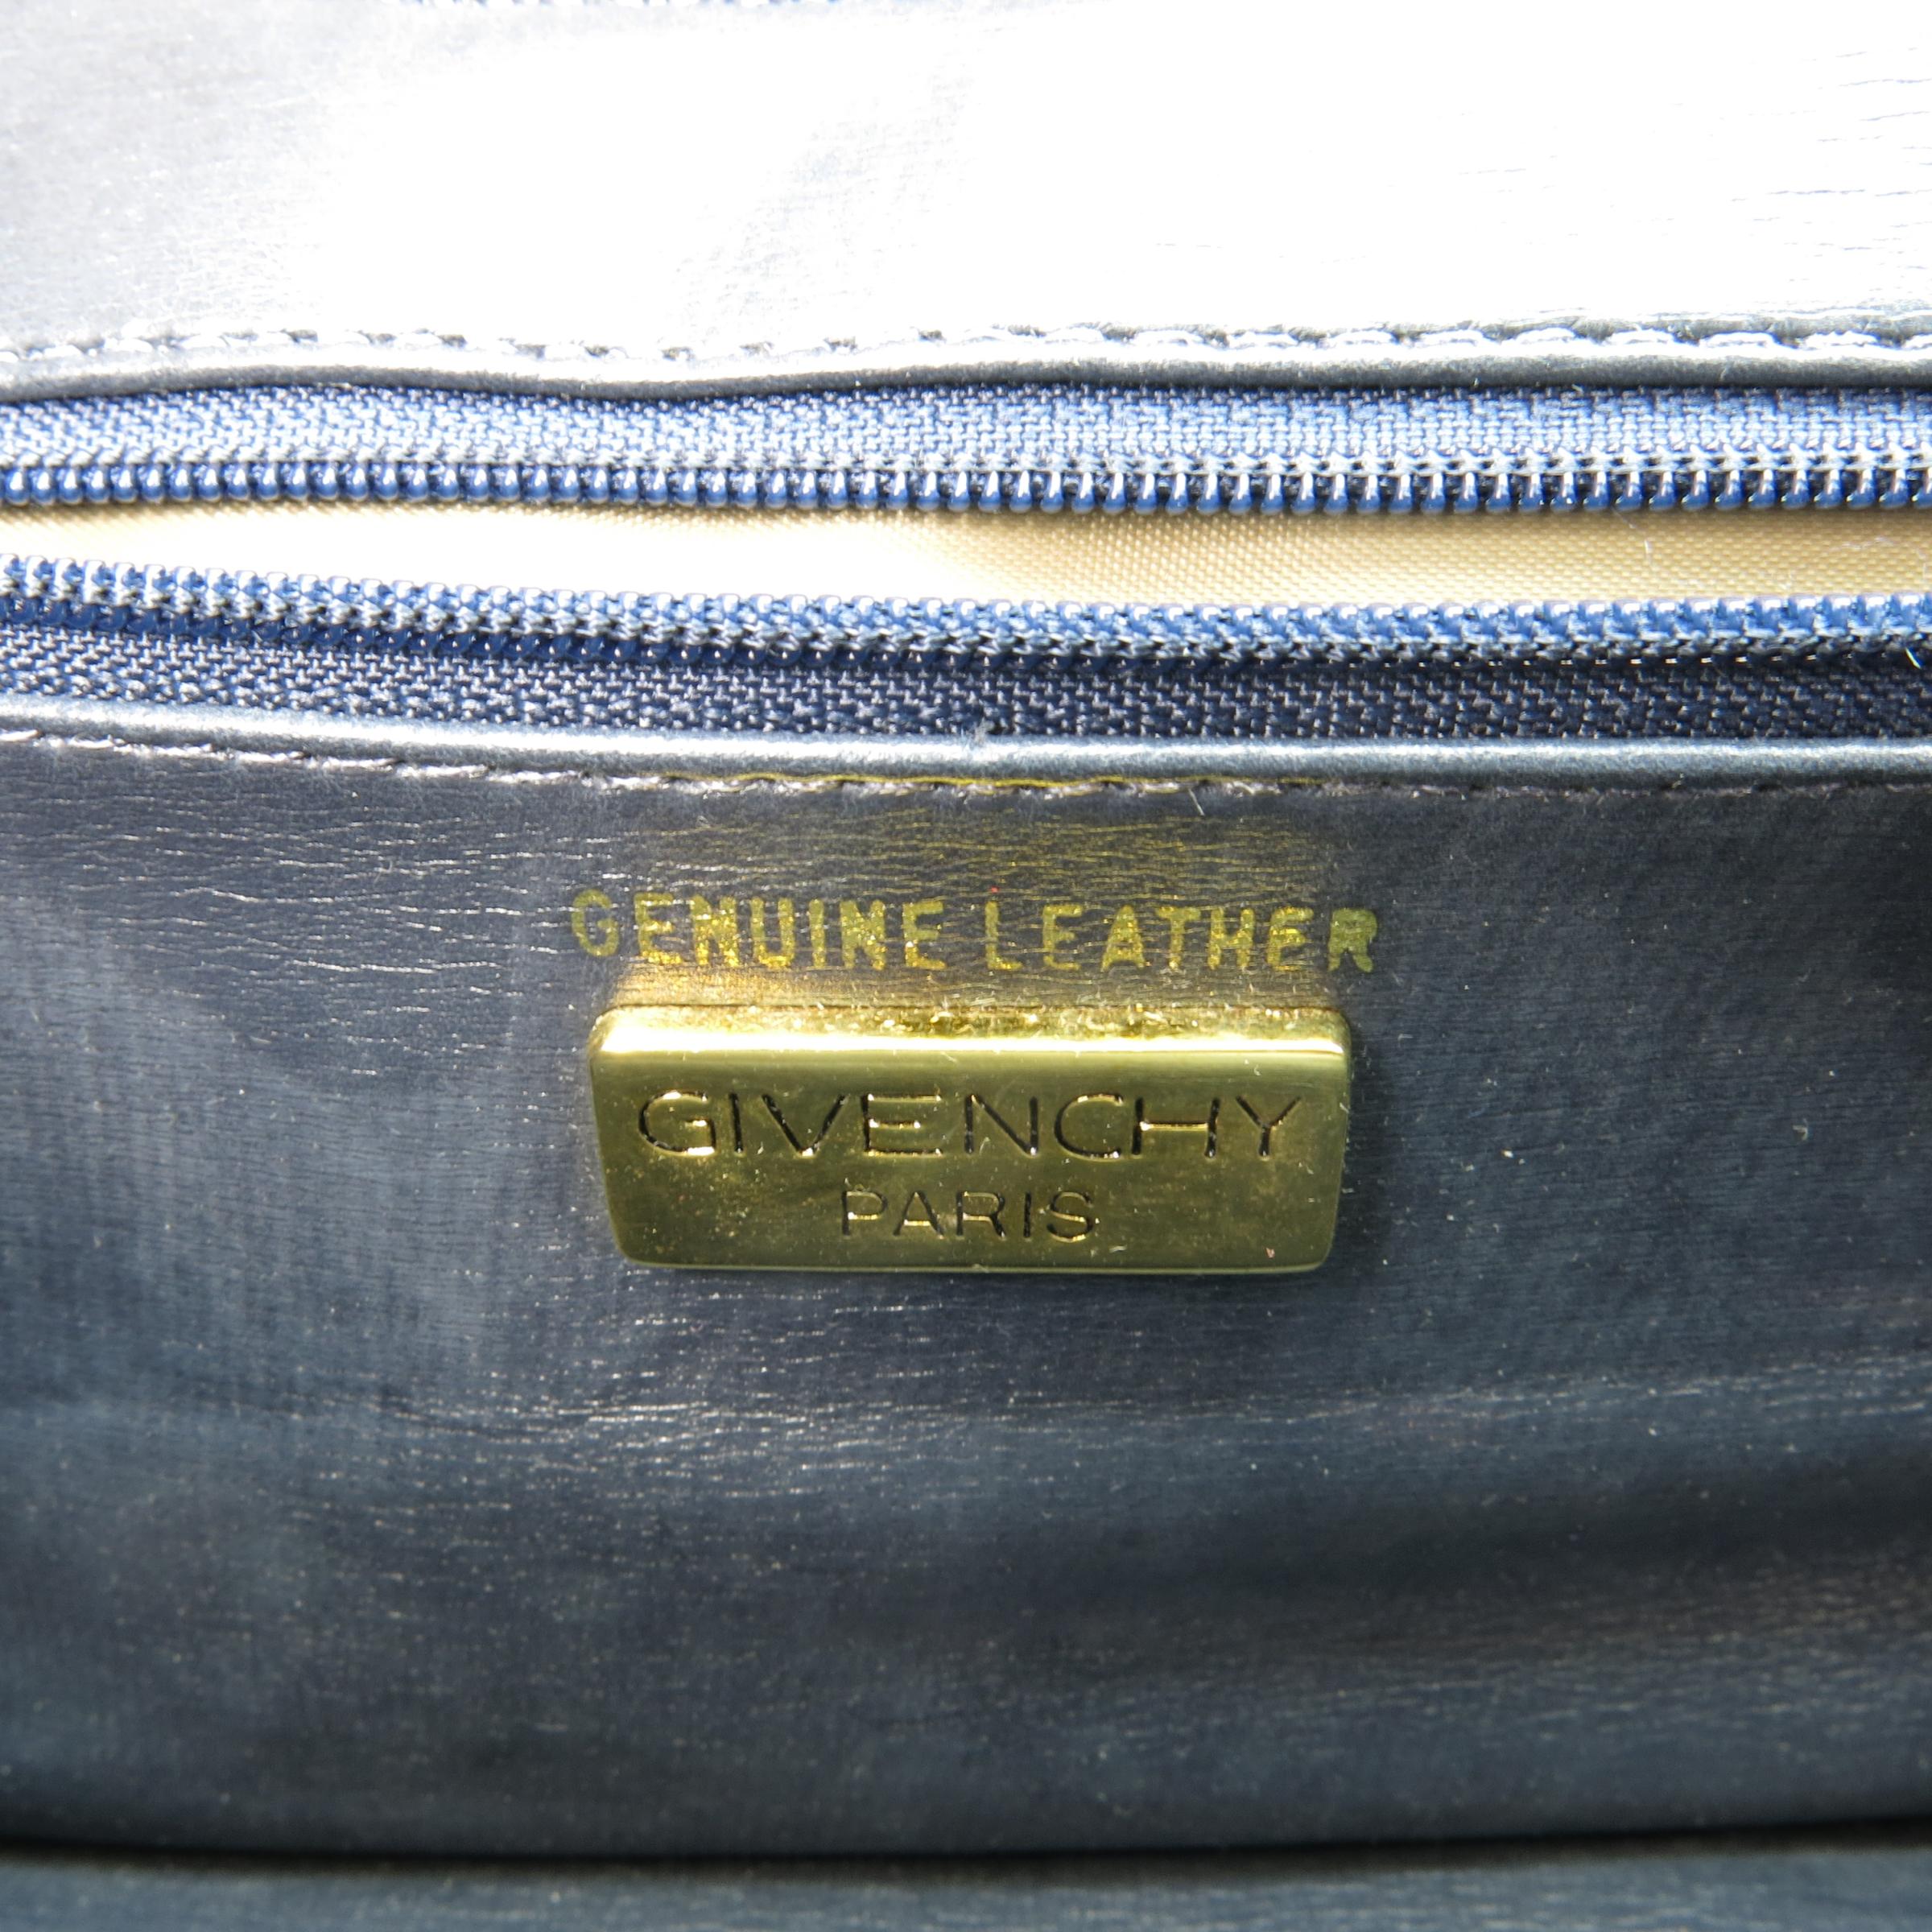 2 Designer Leather Handbags